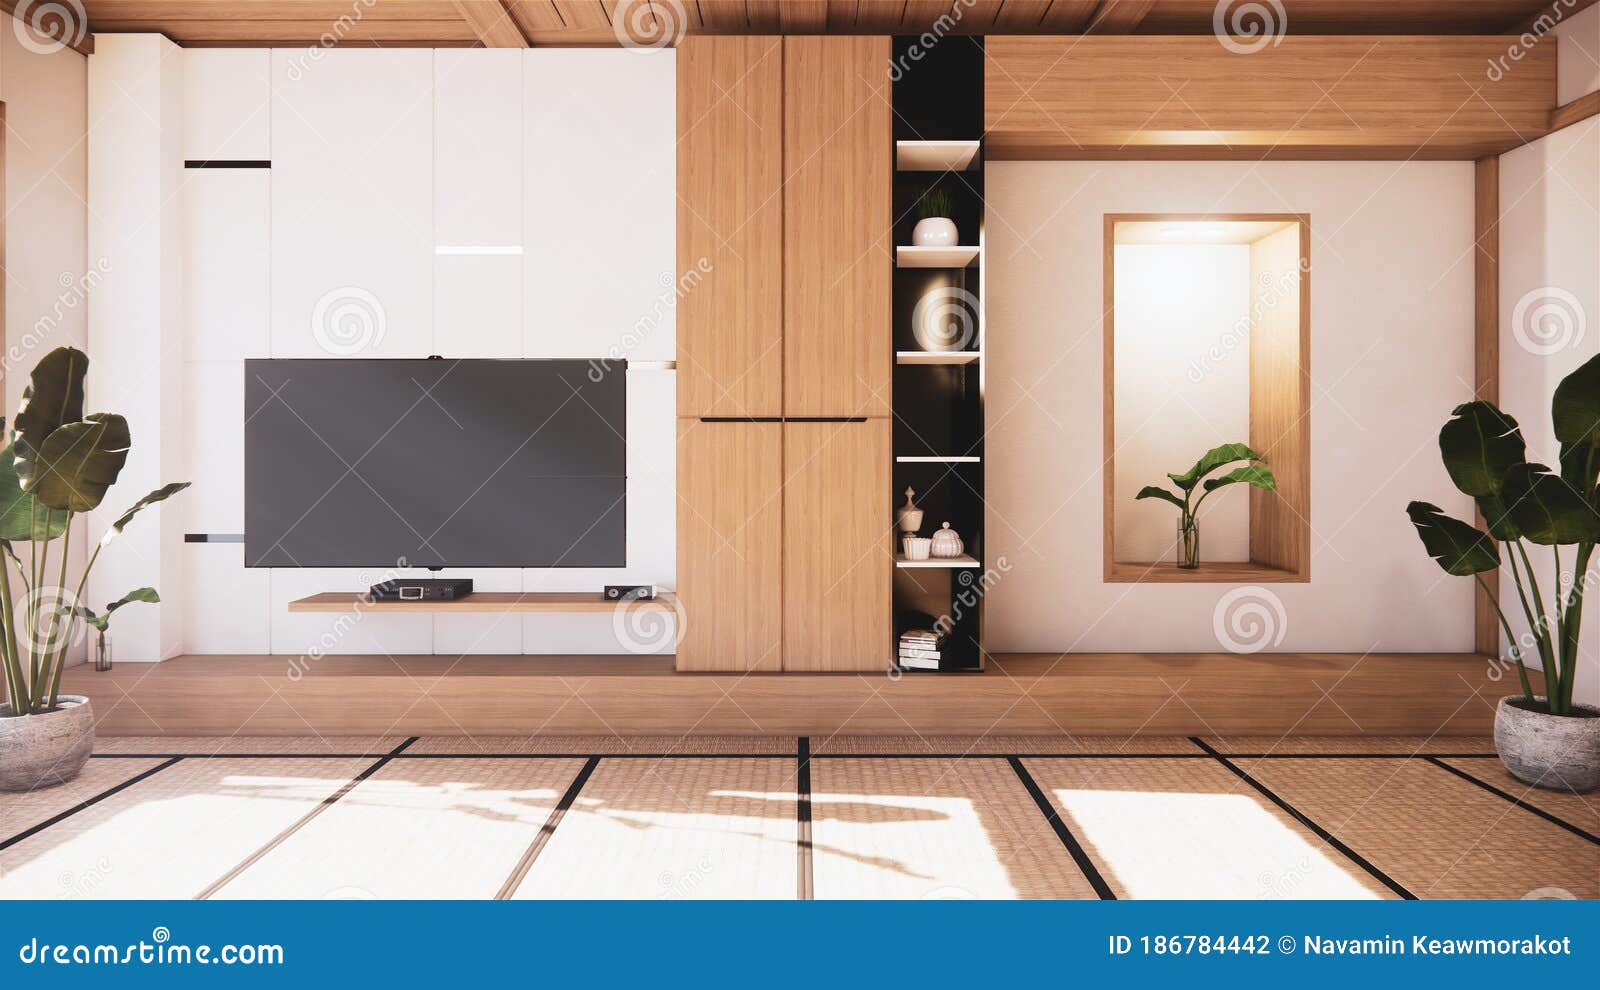 Tv Cabinet And Shelf Wall Design Zen Interior Of Living Room Japanese Style3d Rendering Stock Illustration Illustration Of Elegance